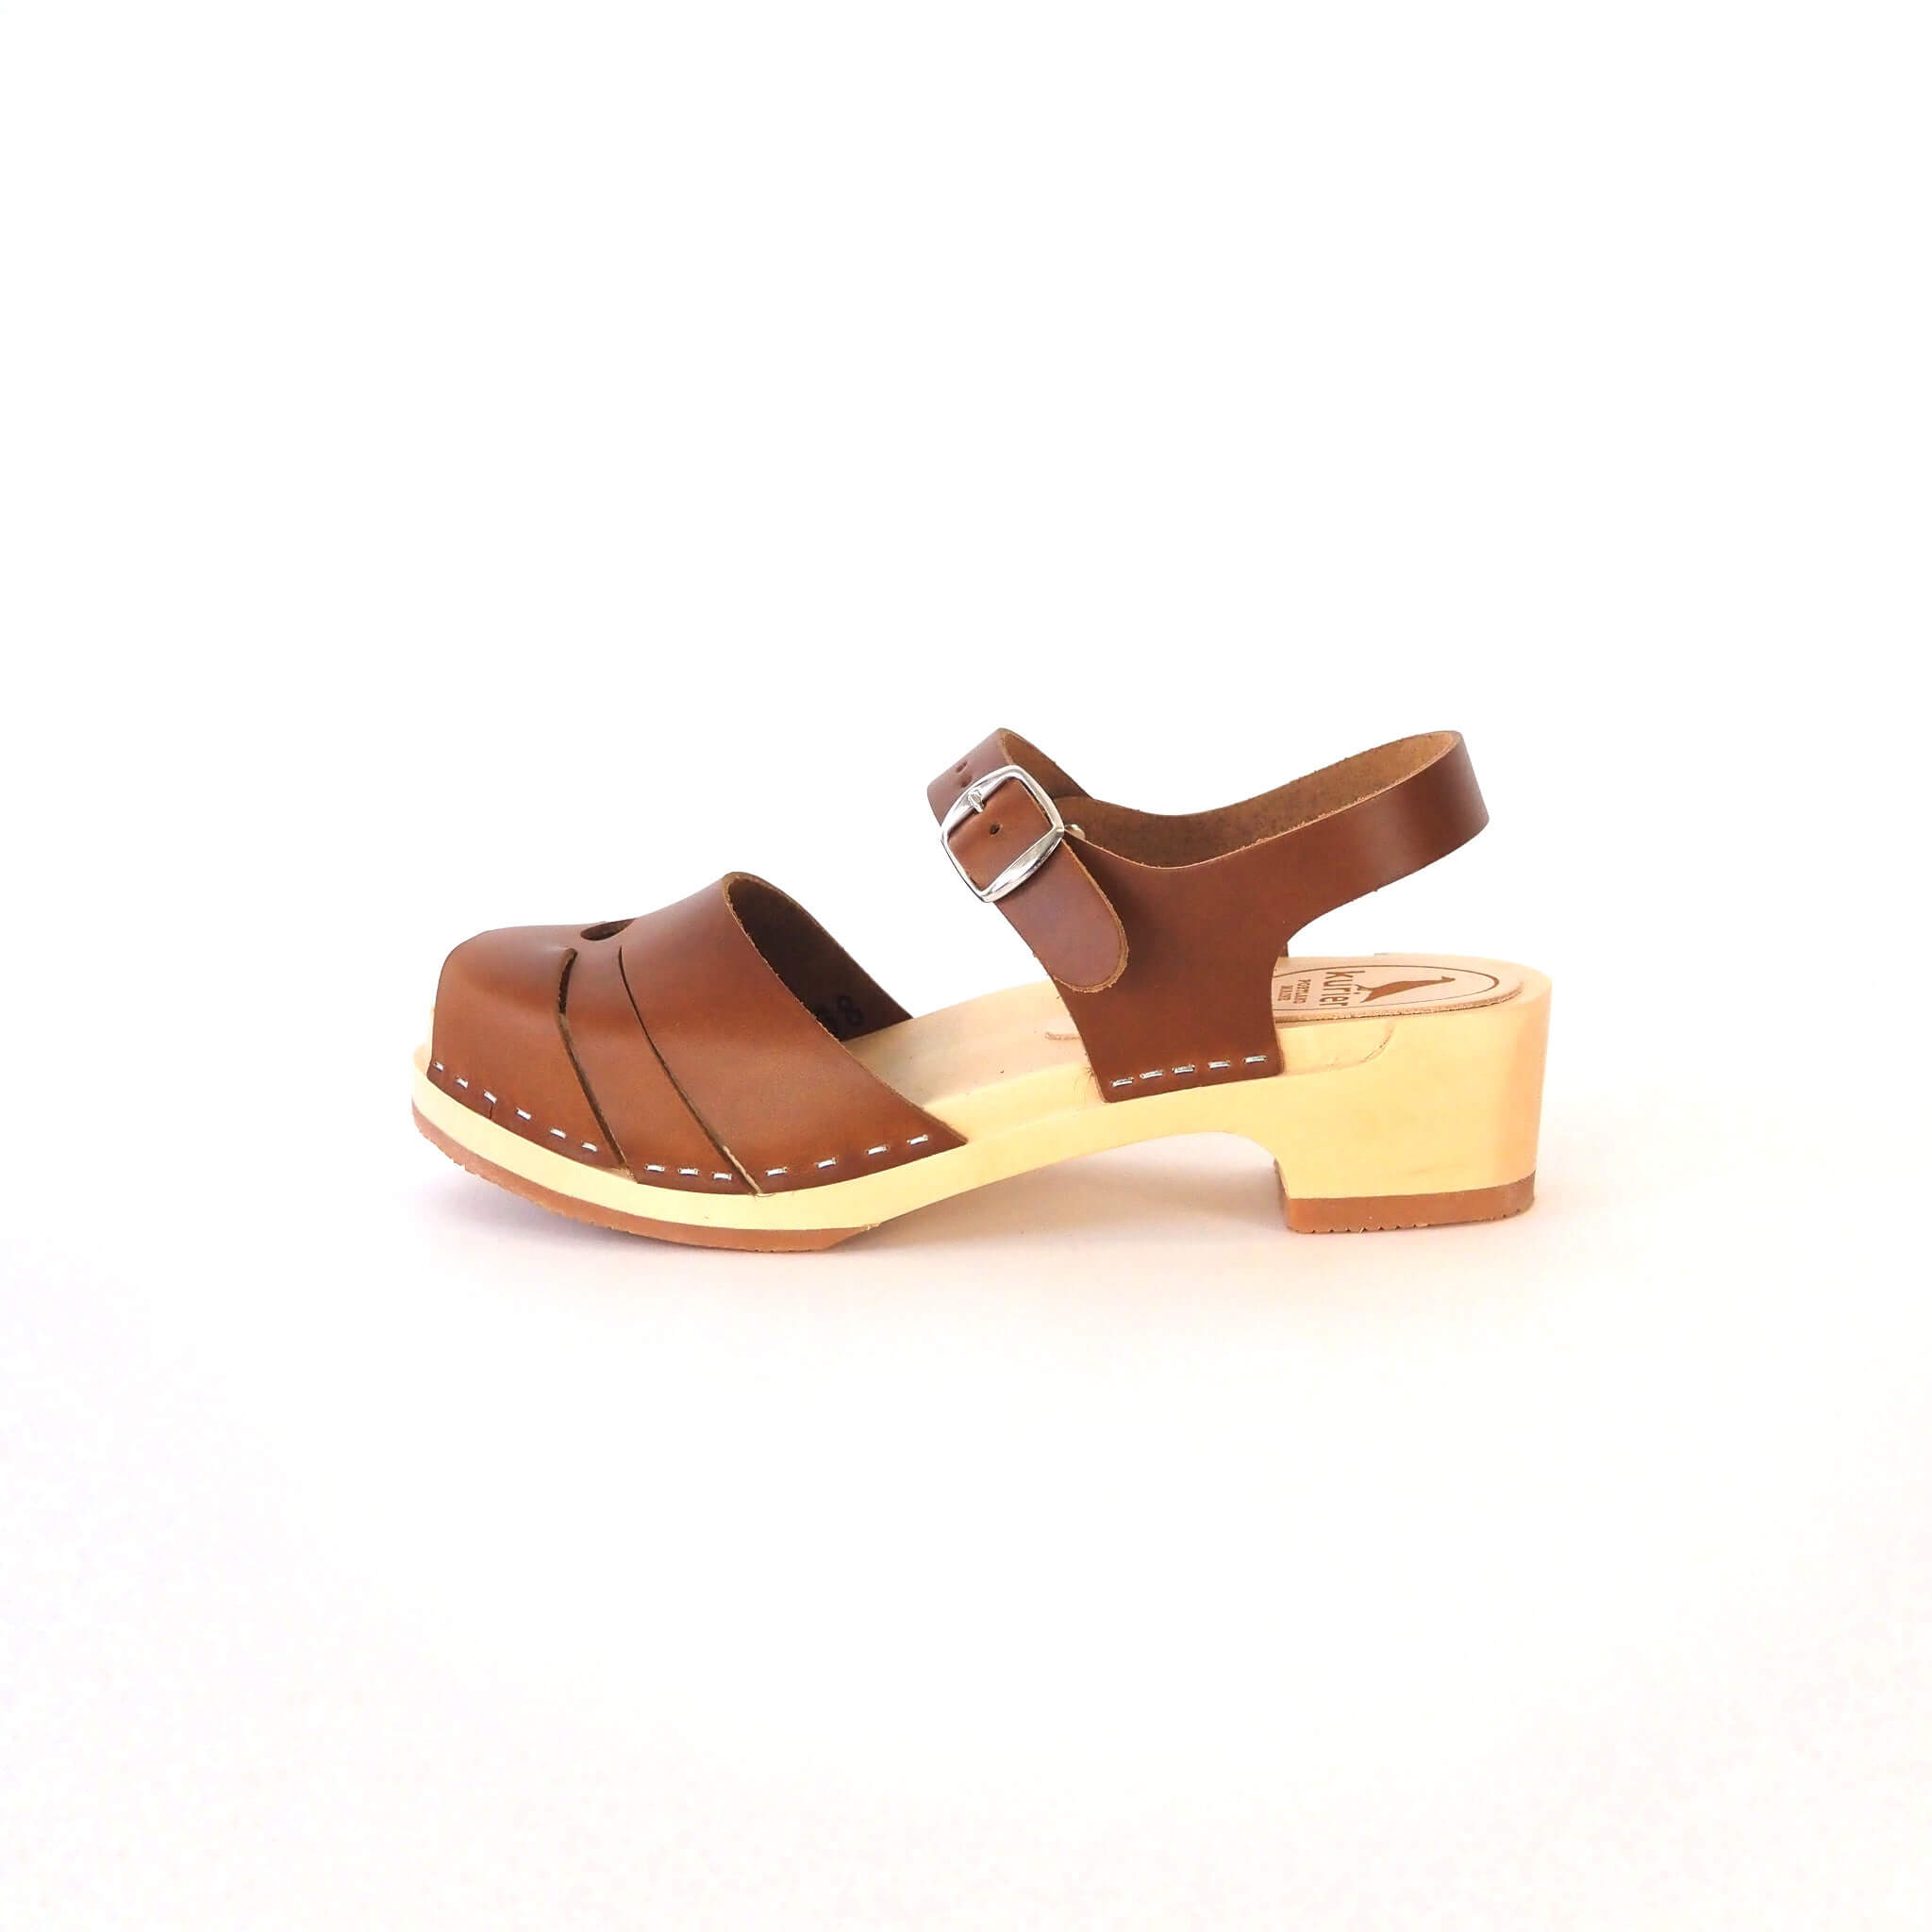 luna clog low heel peep toe sandal handmade italian leather wood - pecan side view